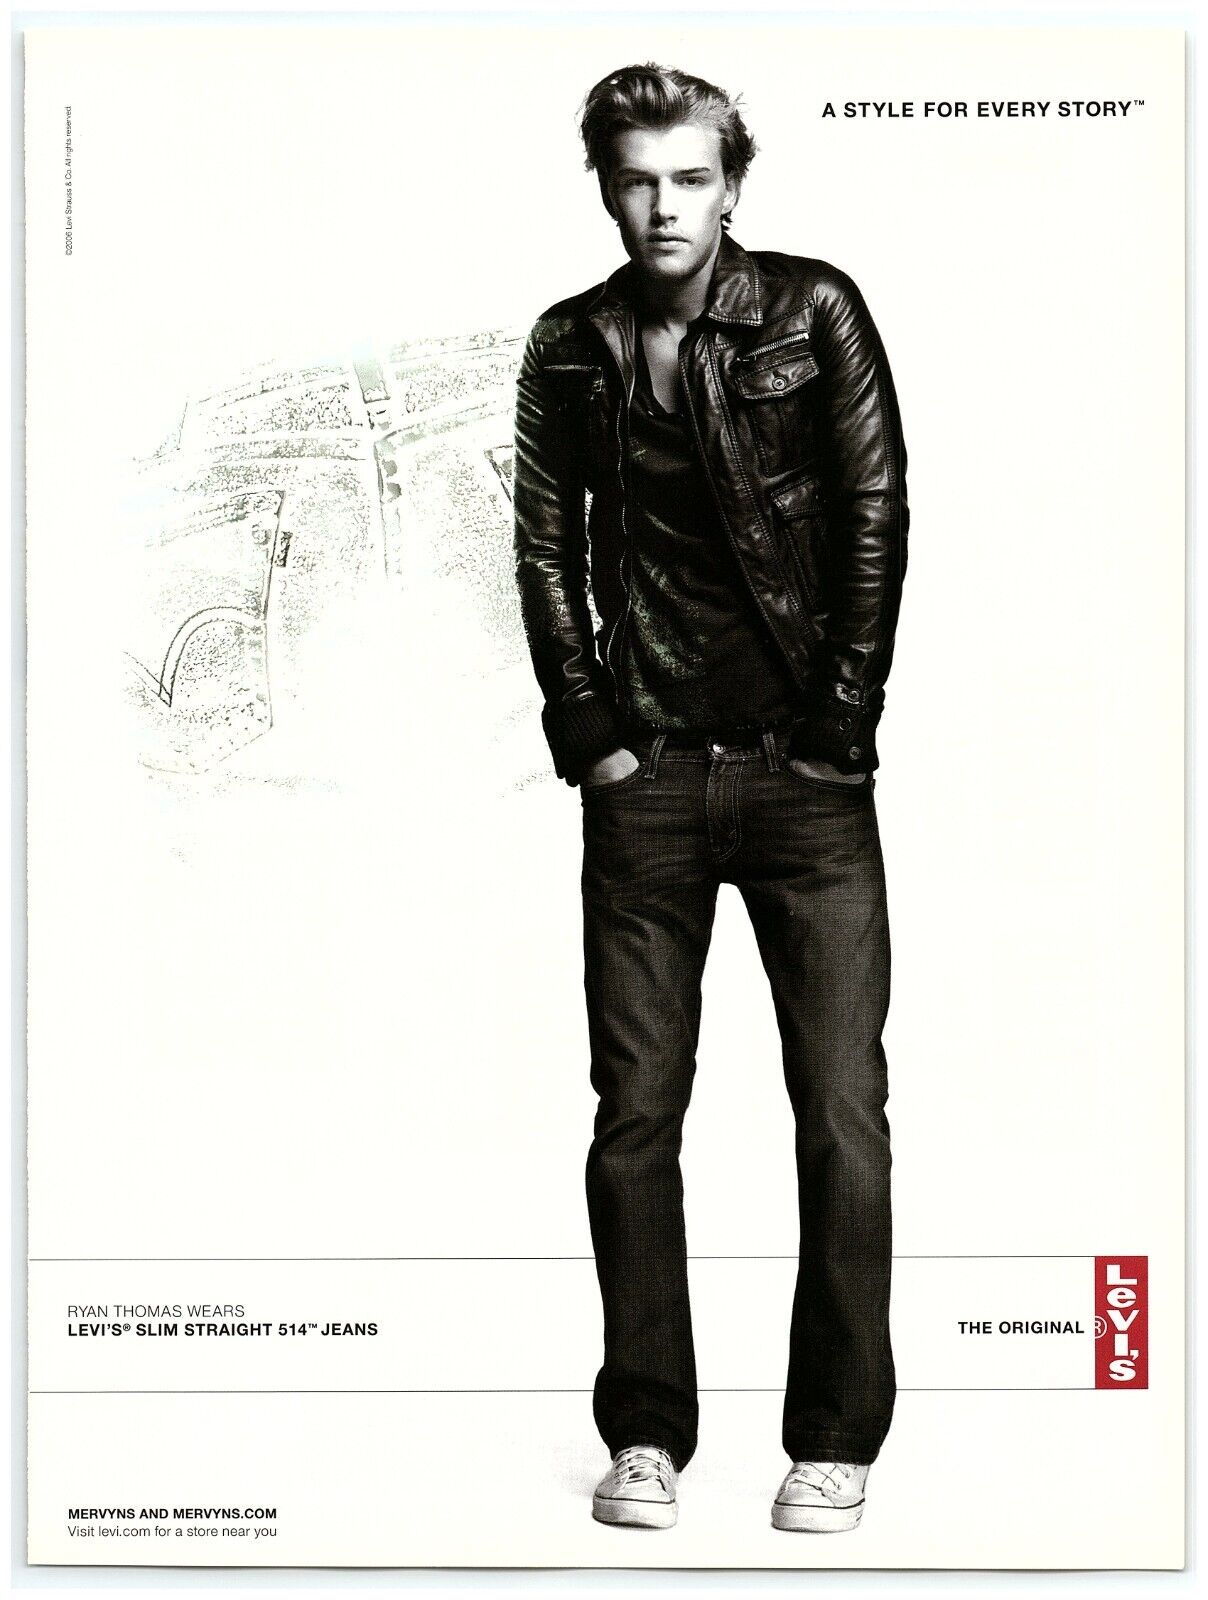 2006 Levi\'s Print Ad, Slim Straight 514 Jeans, Ryan Thomas, Black Jacket, Denim